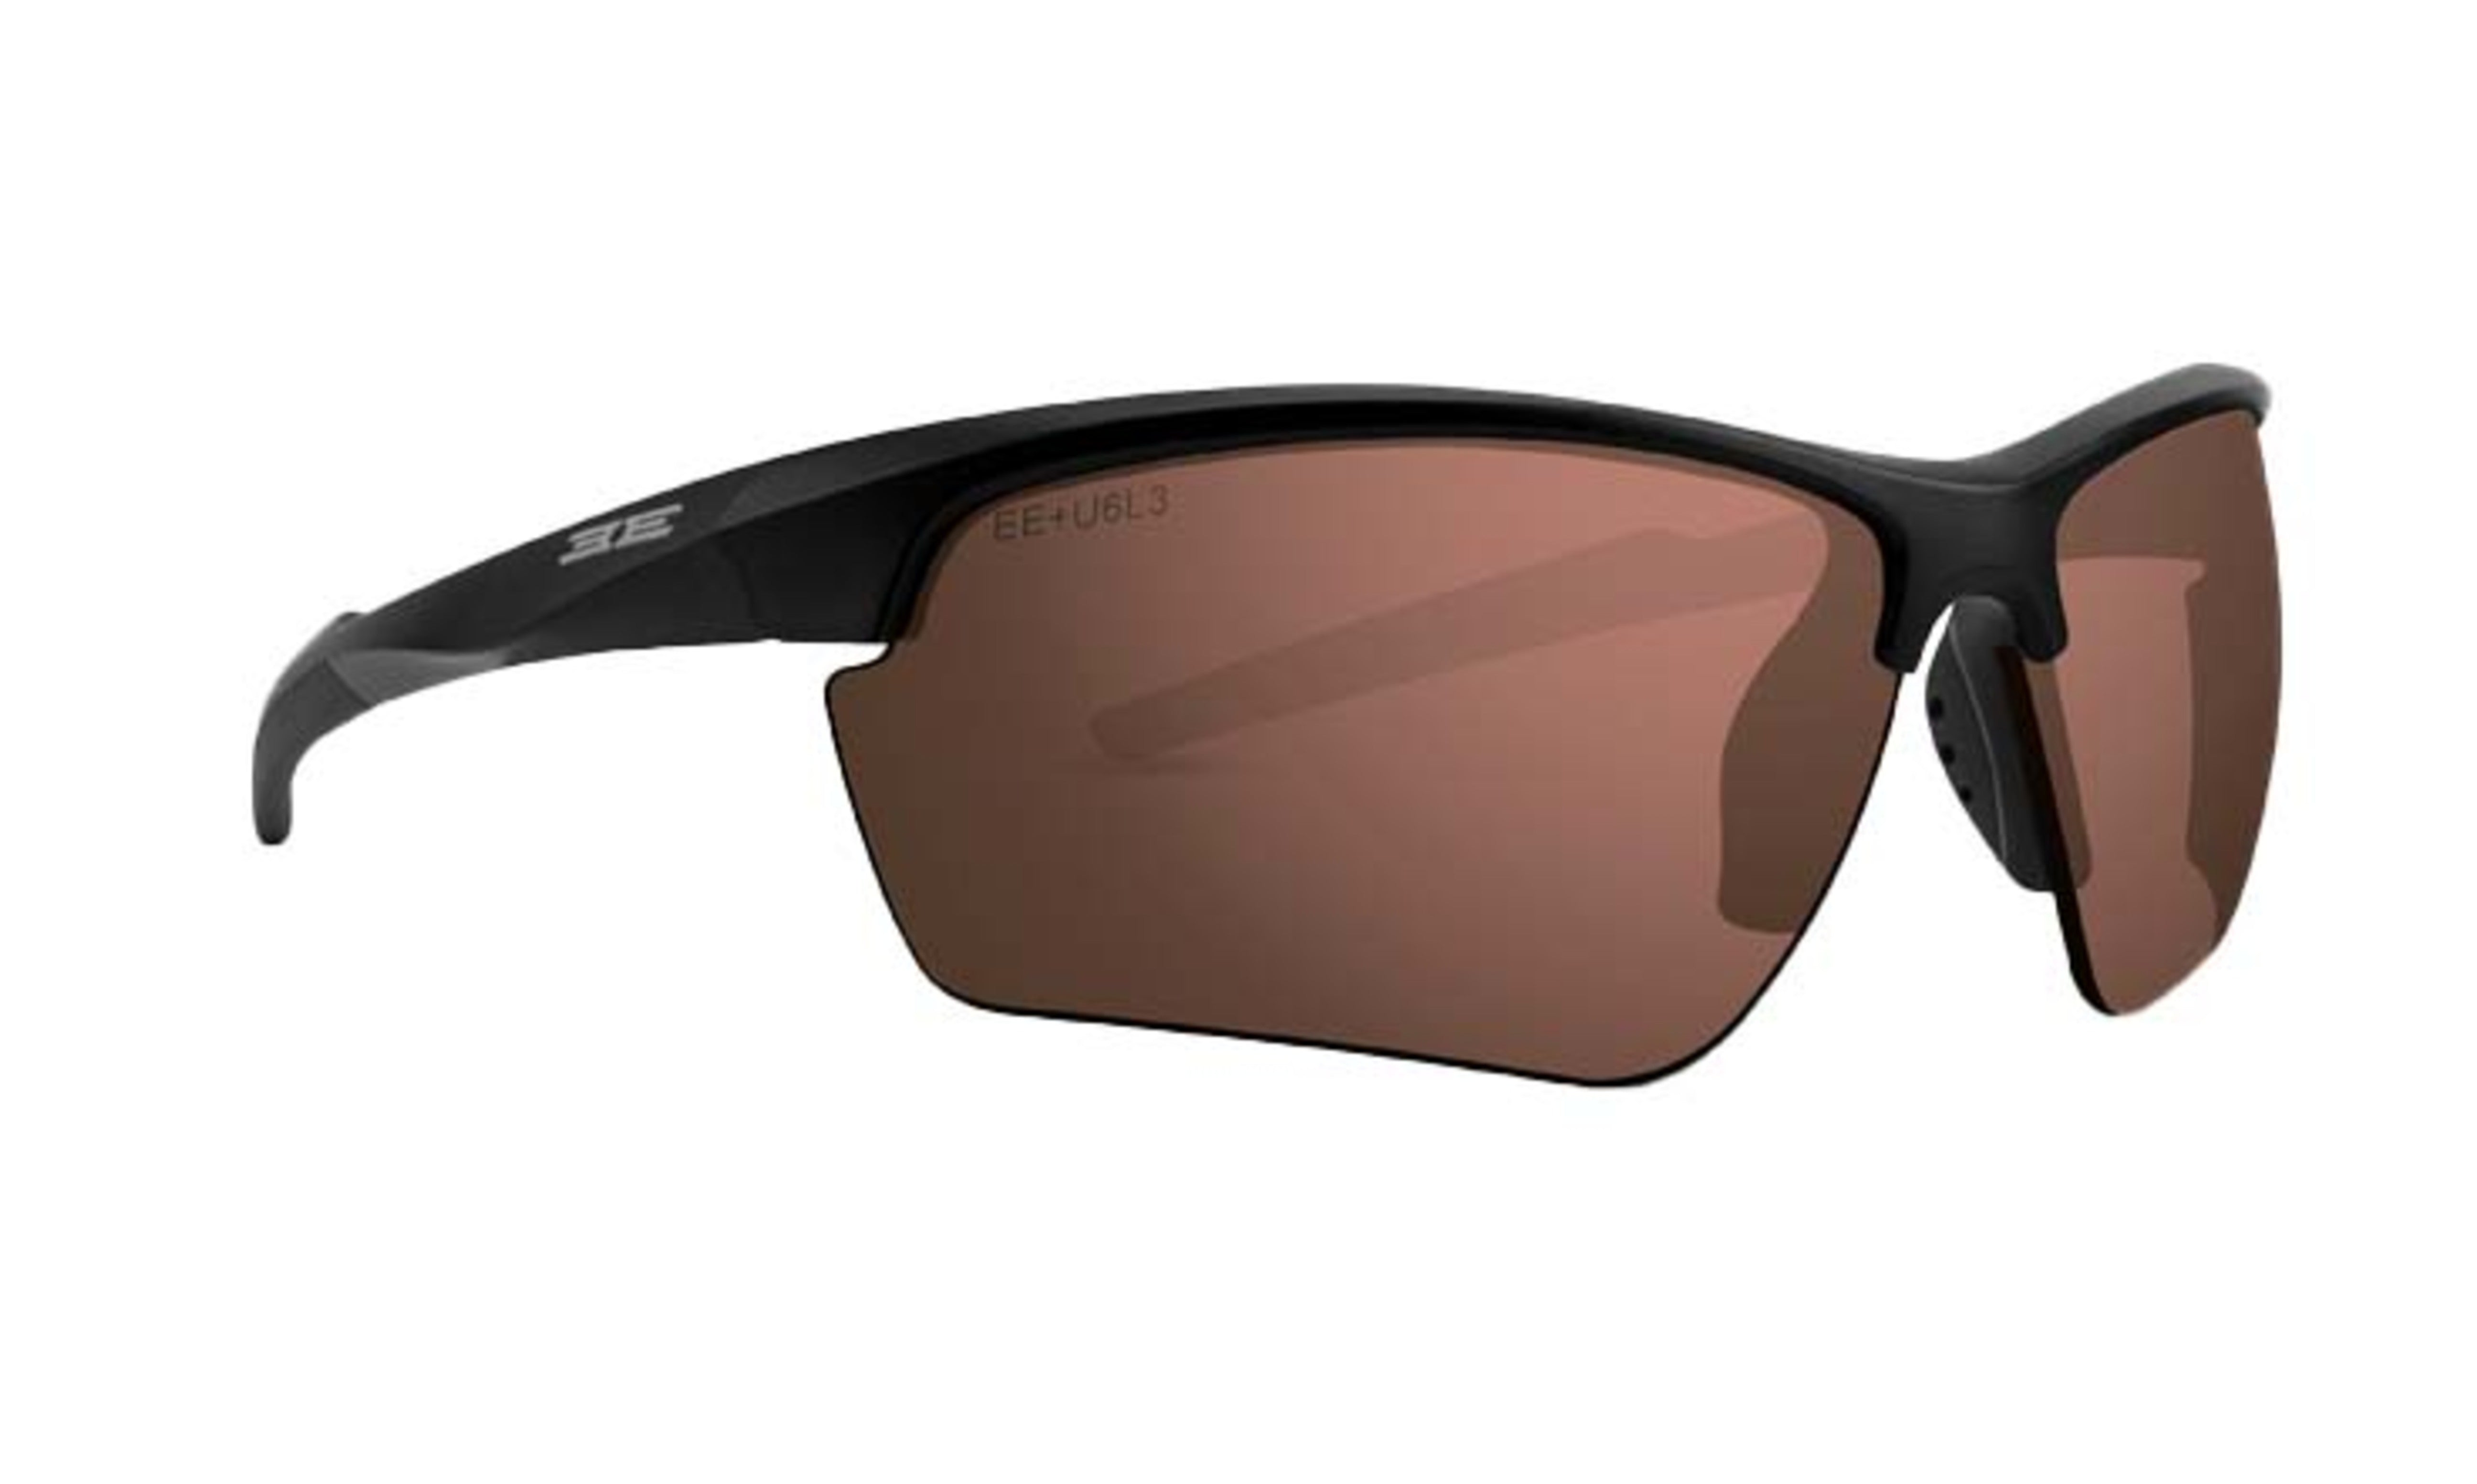 Kennedy | Epoch Eyewear Sport Wrap Sunglasses